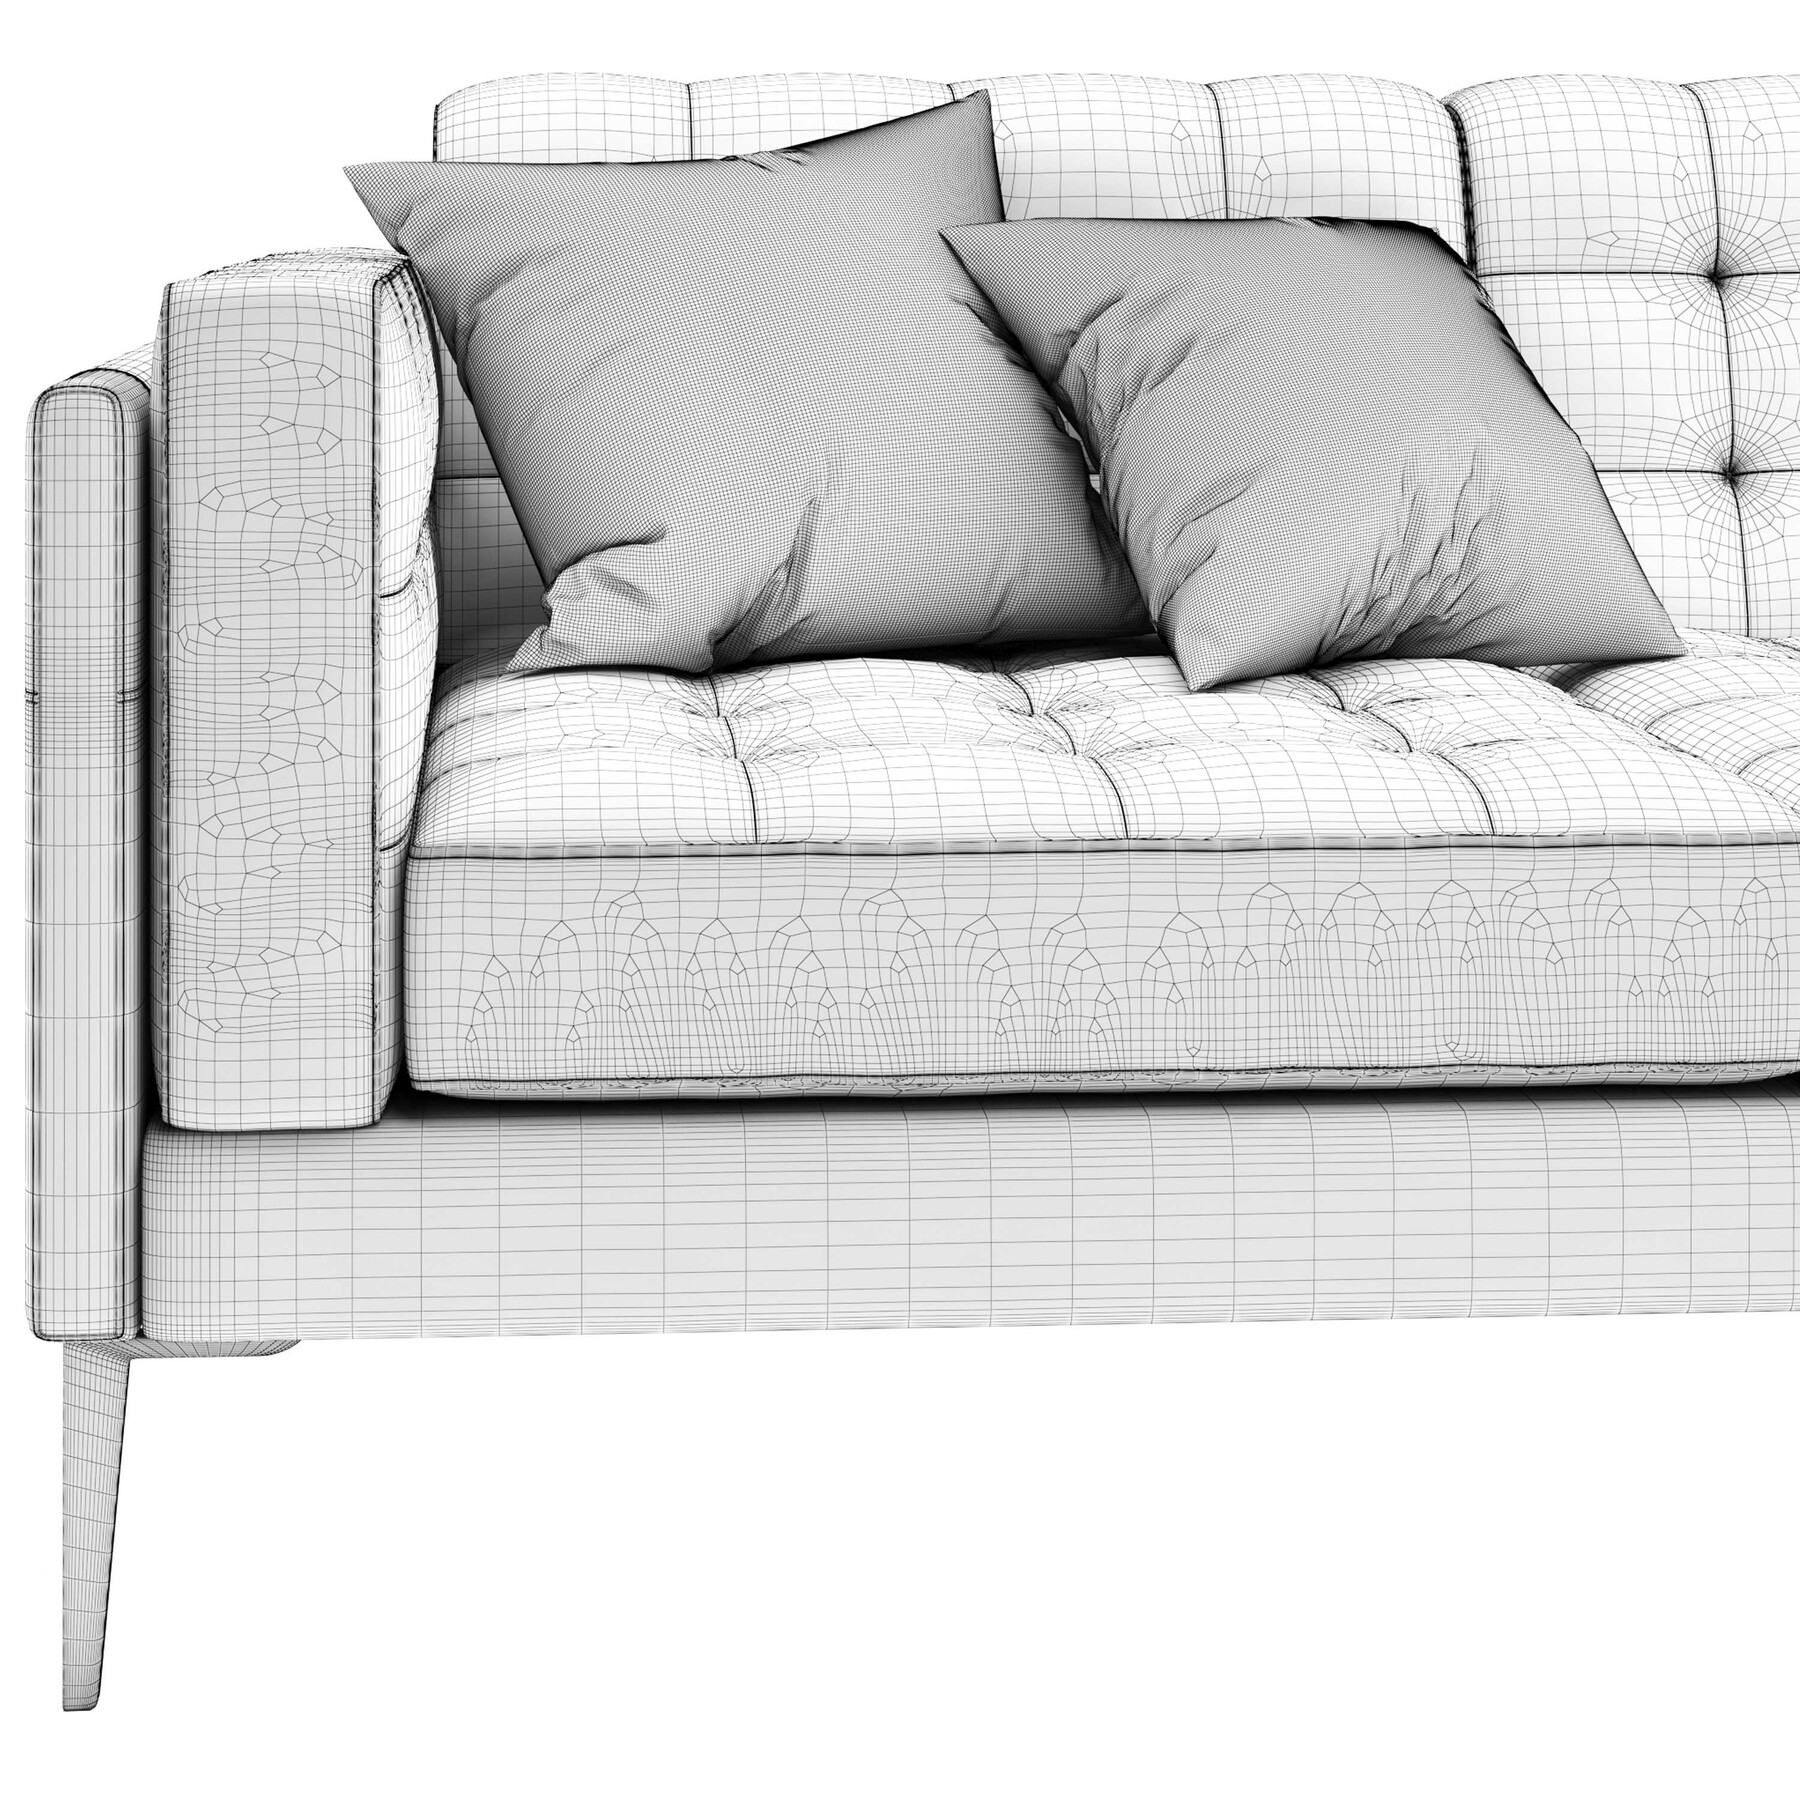 Fabric rendering v1. Sofa 3d model.